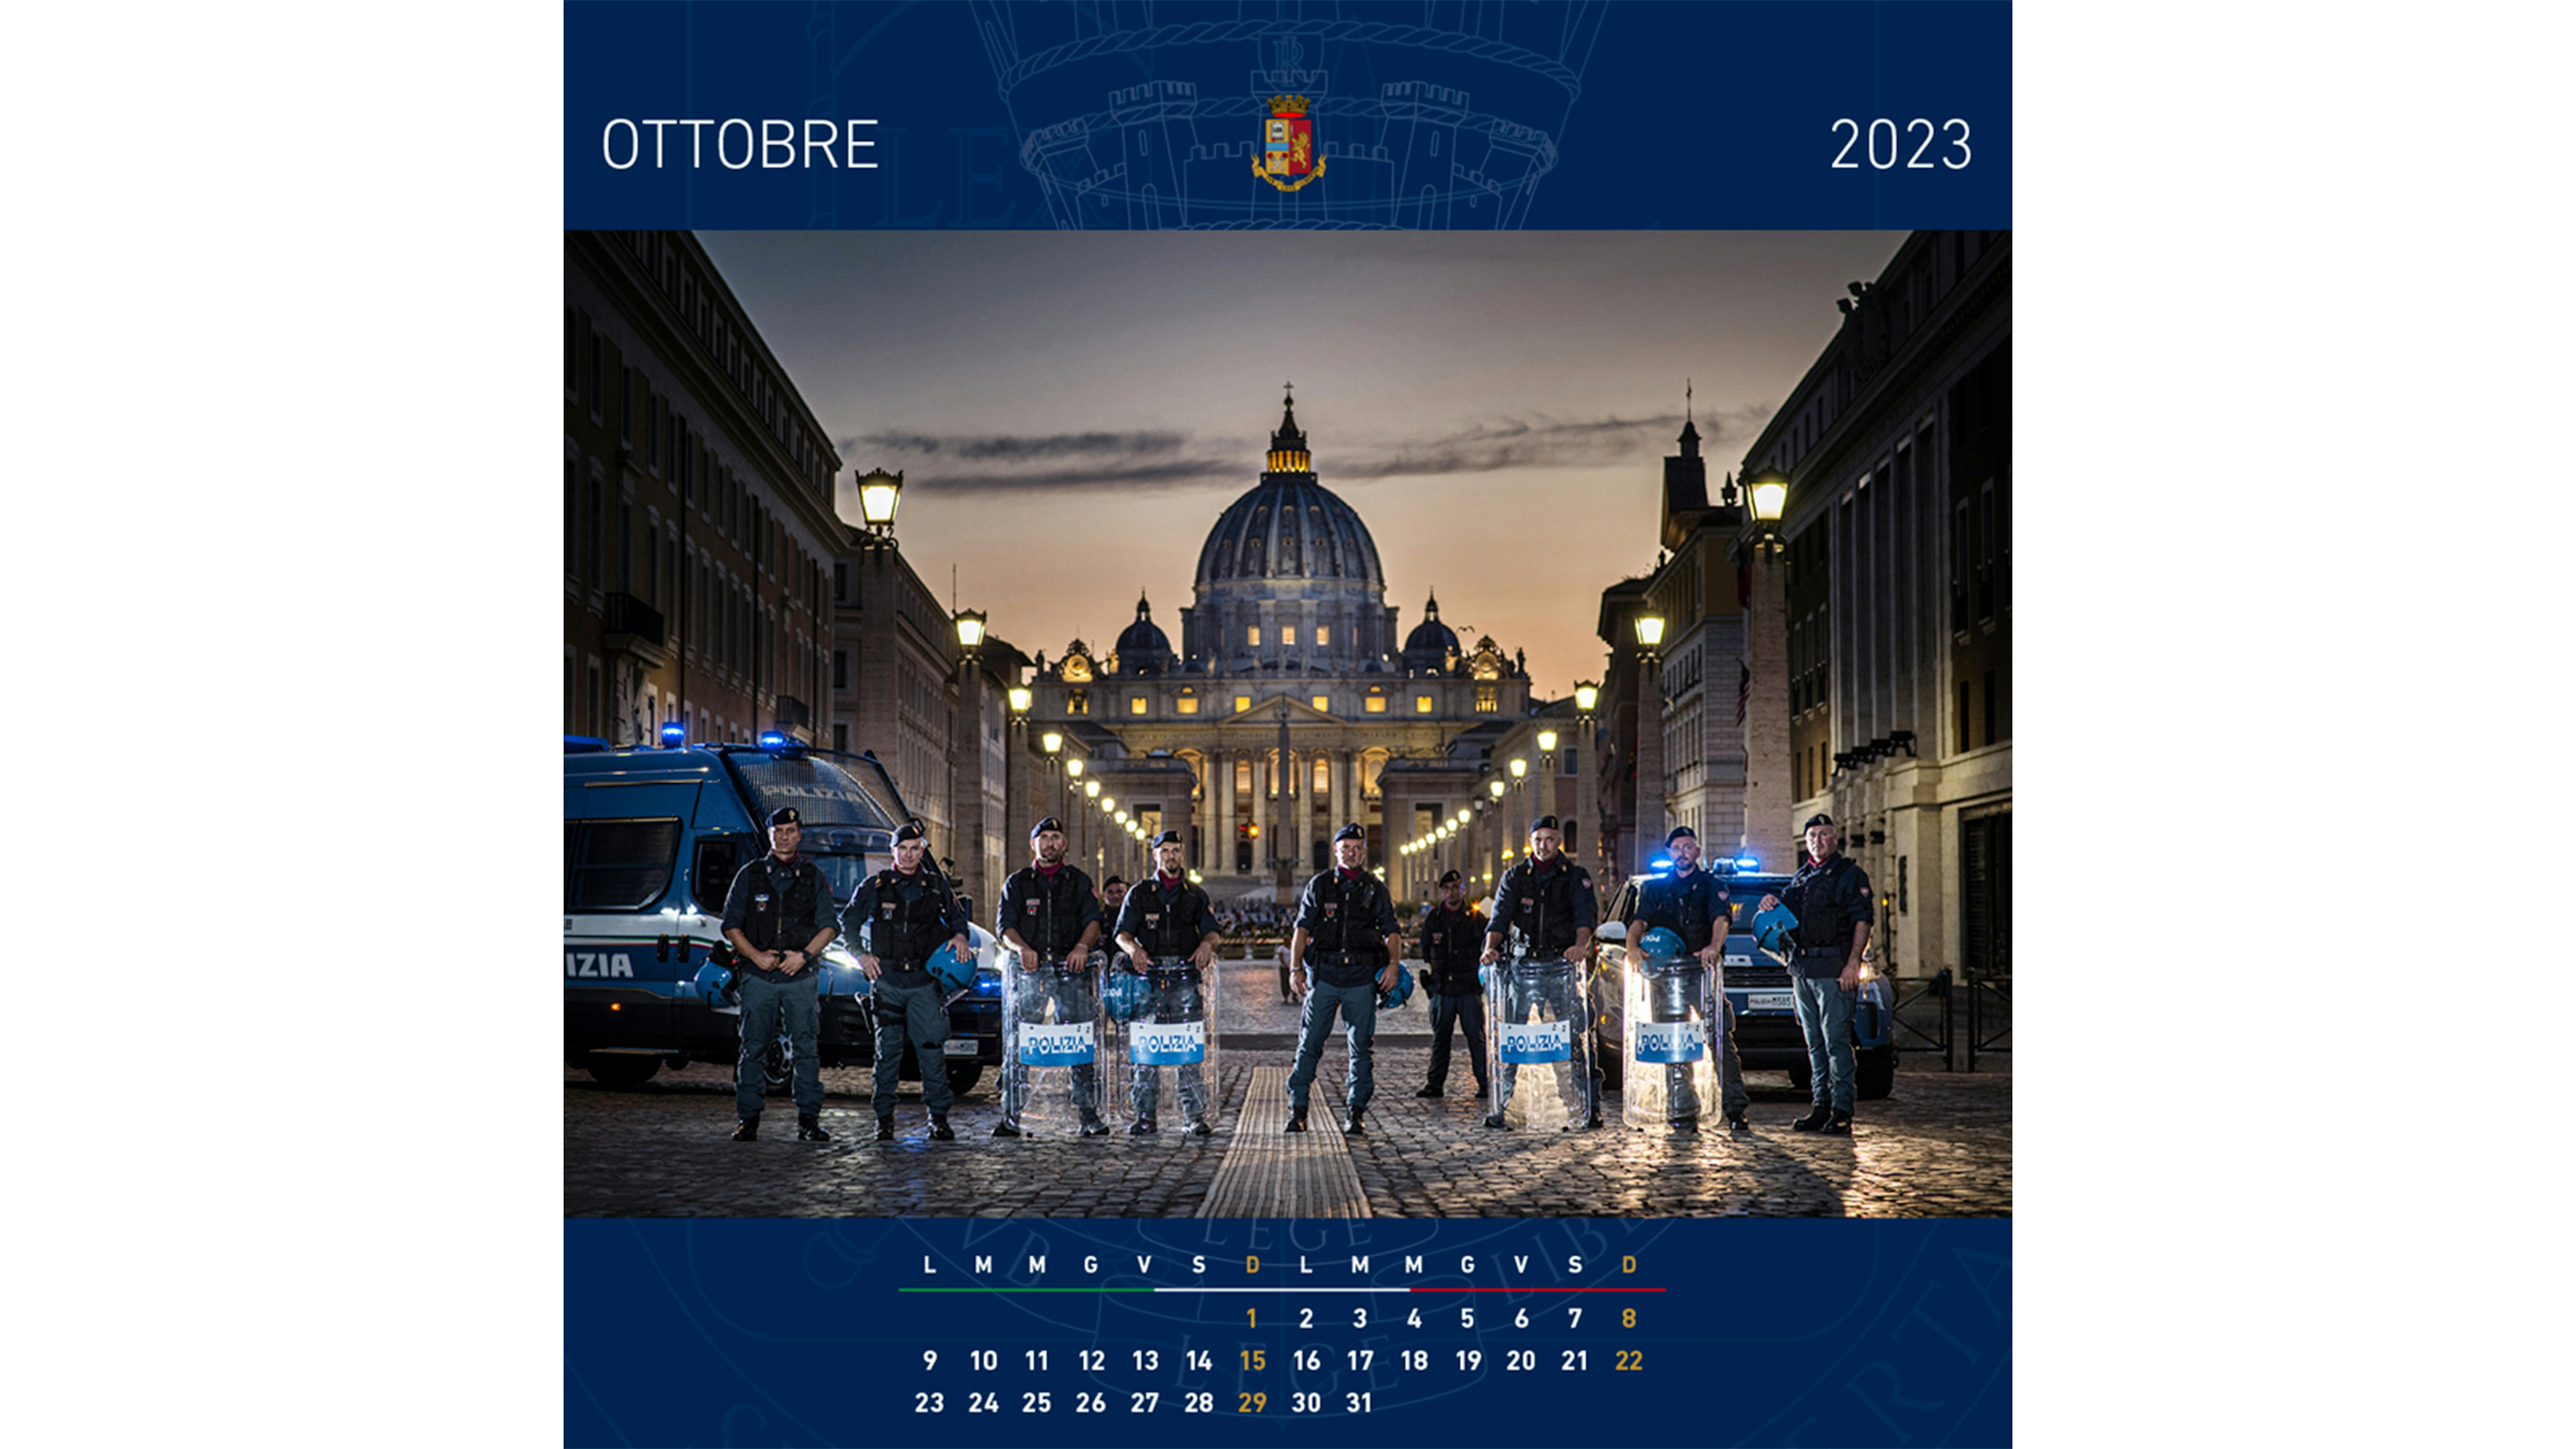 anteprima calendario polizia 2023 ottobre